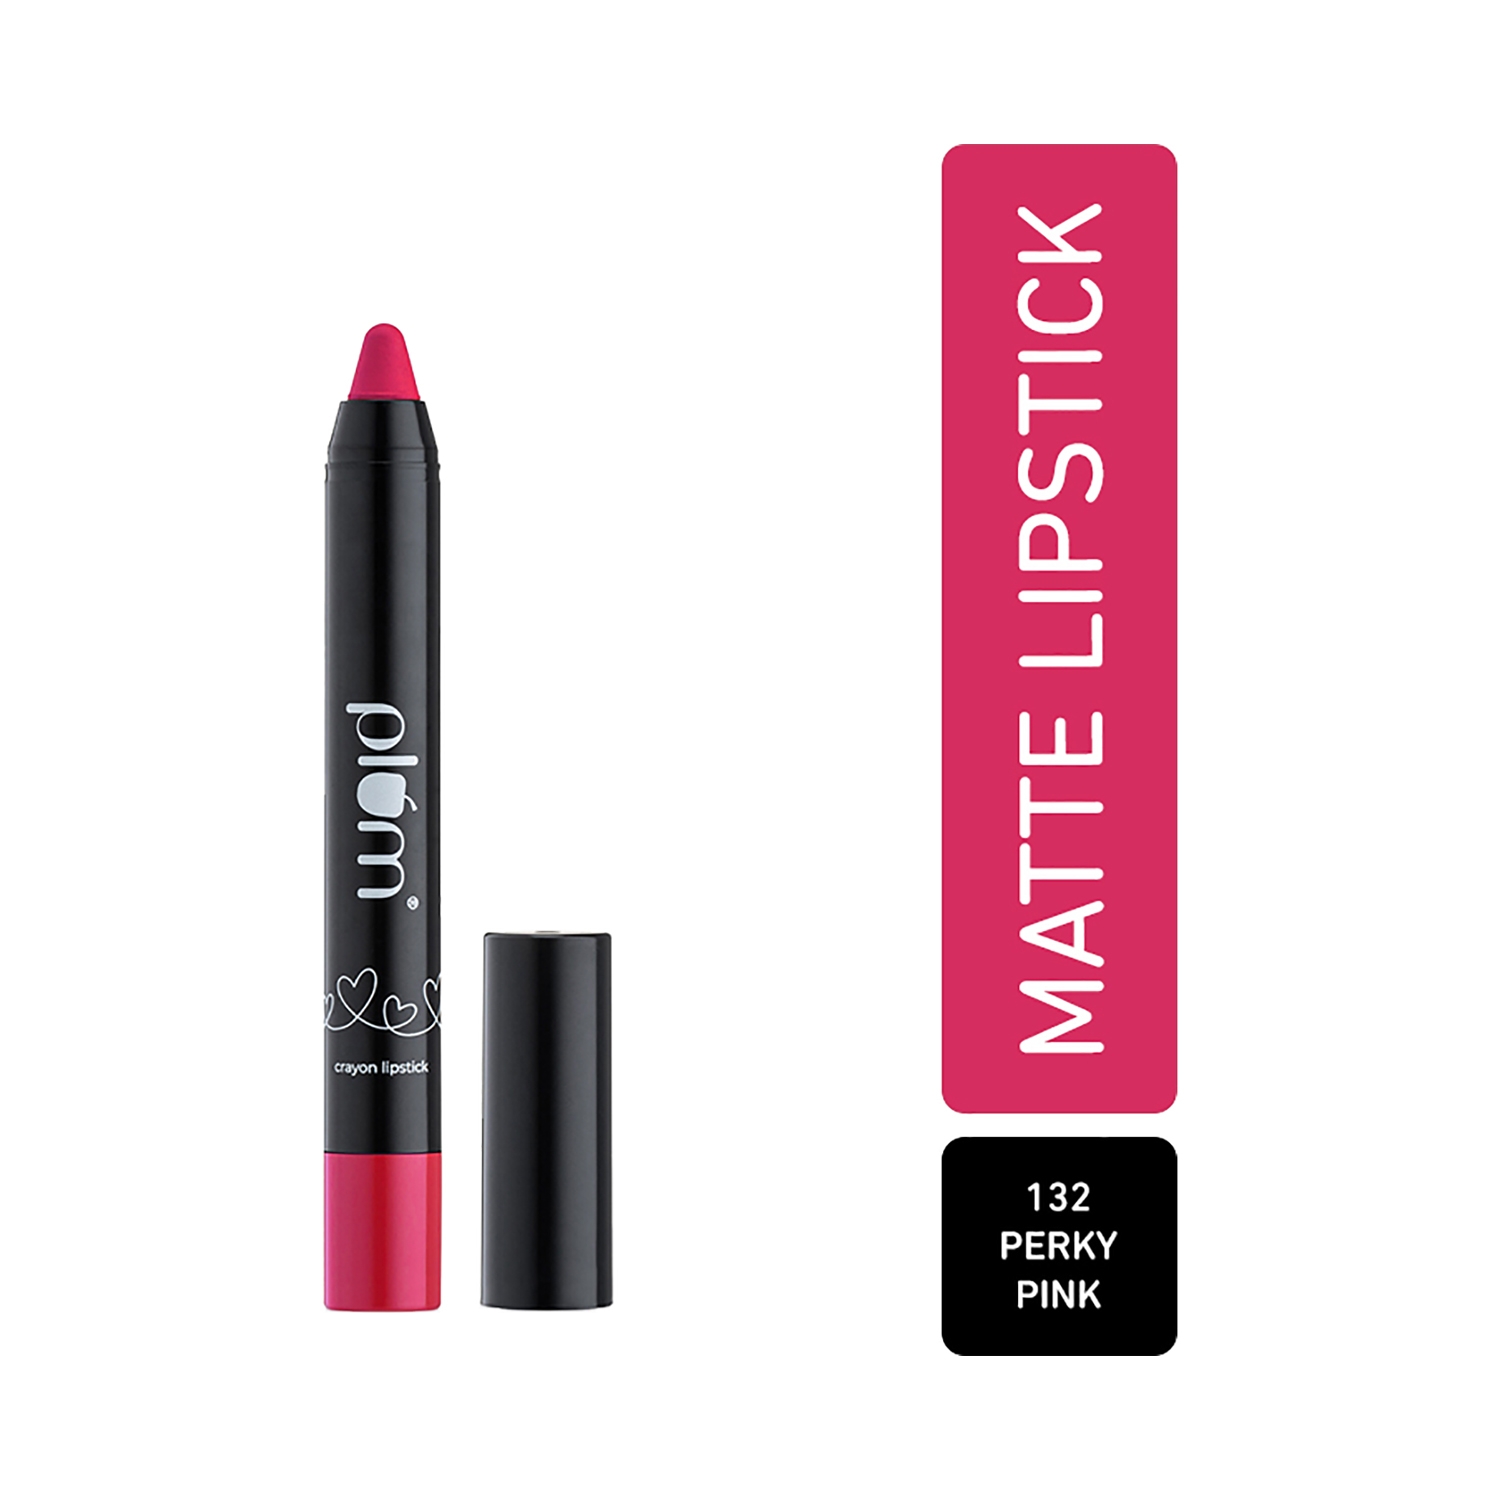 Plum | Plum Twist & Go Matte Crayon Lipstick with Ceramides & Hyaluronic Acid - 132 Perky Pink (1.8g)